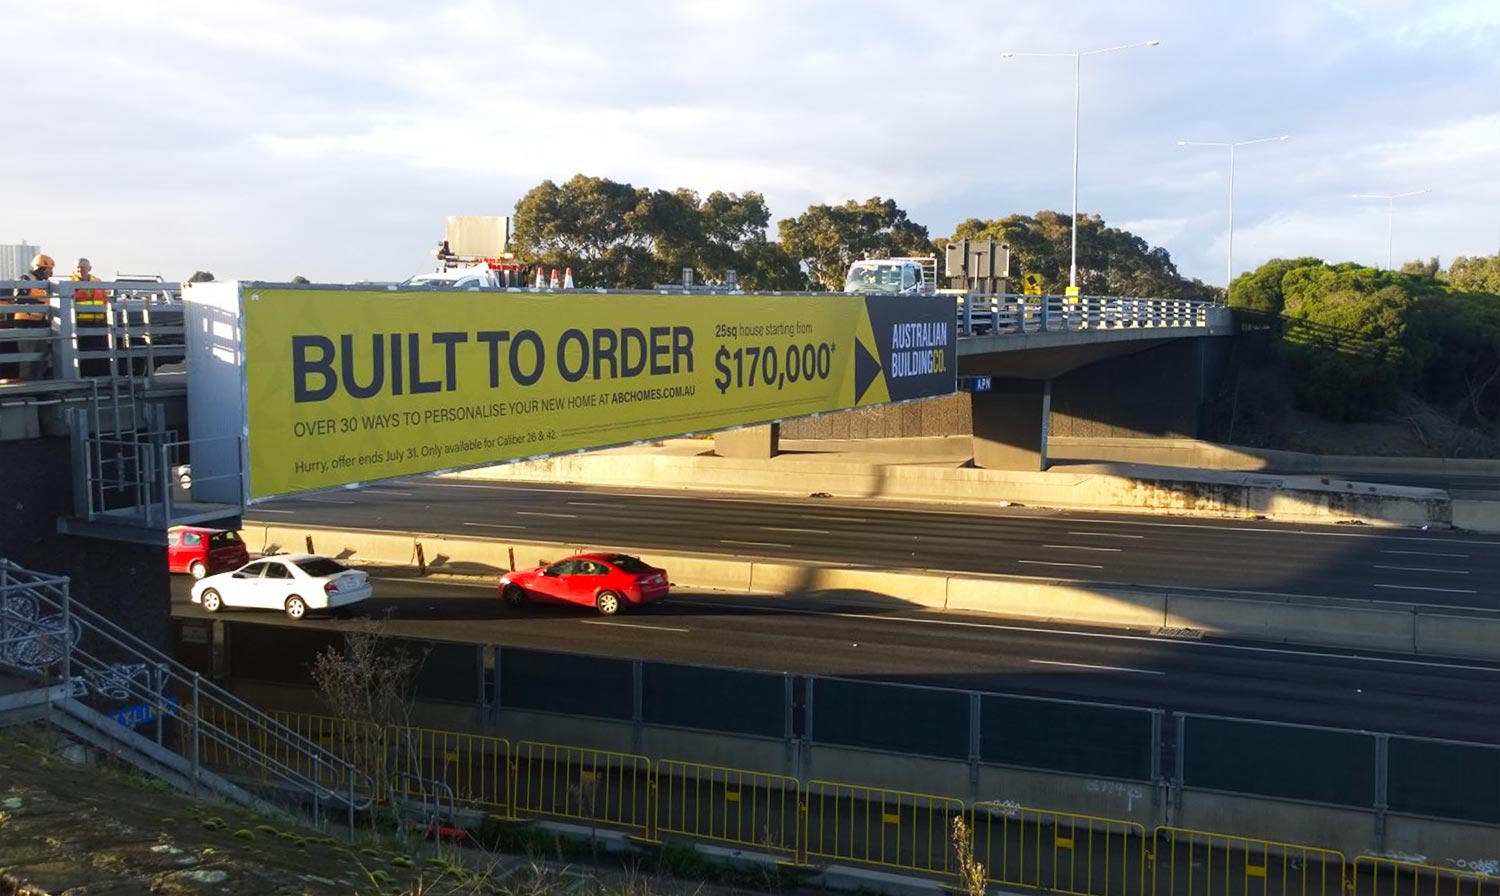 Australian Building Company - Built to Order. Billboard Ad